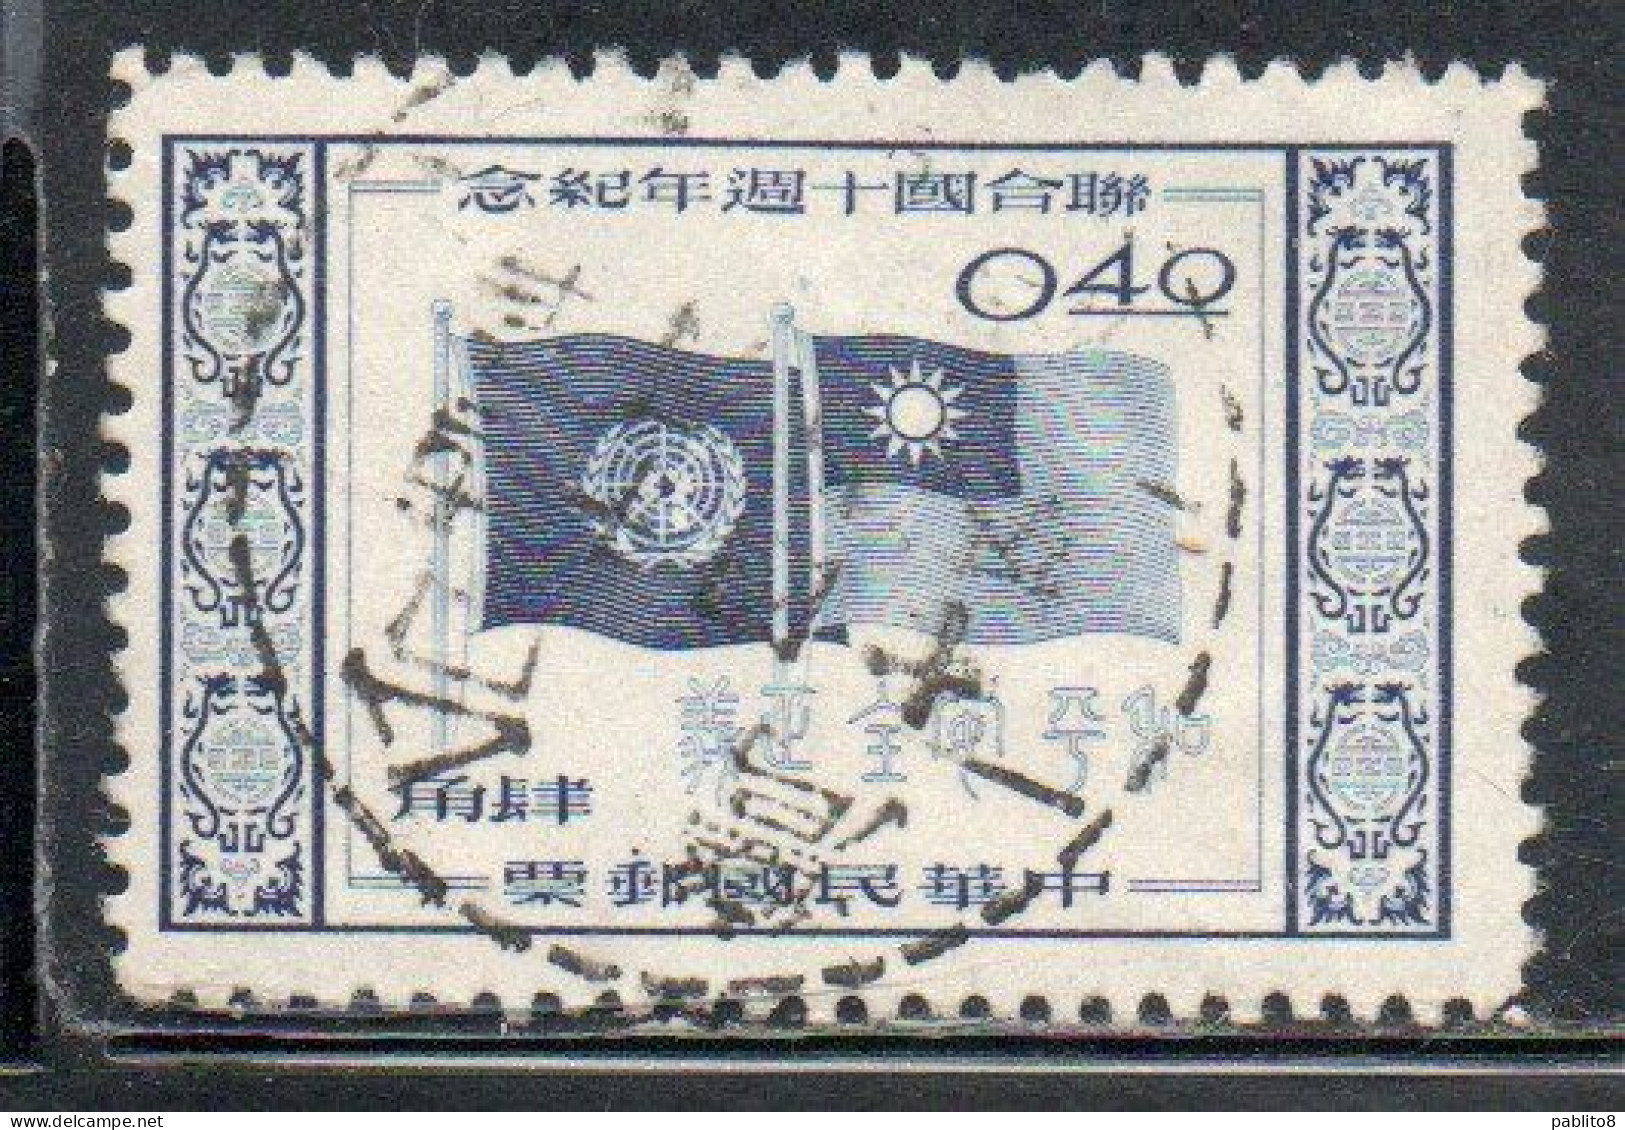 CHINA REPUBLIC CINA TAIWAN FORMOSA 1955 UN ONU ANNIVERSARY FLAGS 40c USED USATO OBLITERE' - Gebruikt